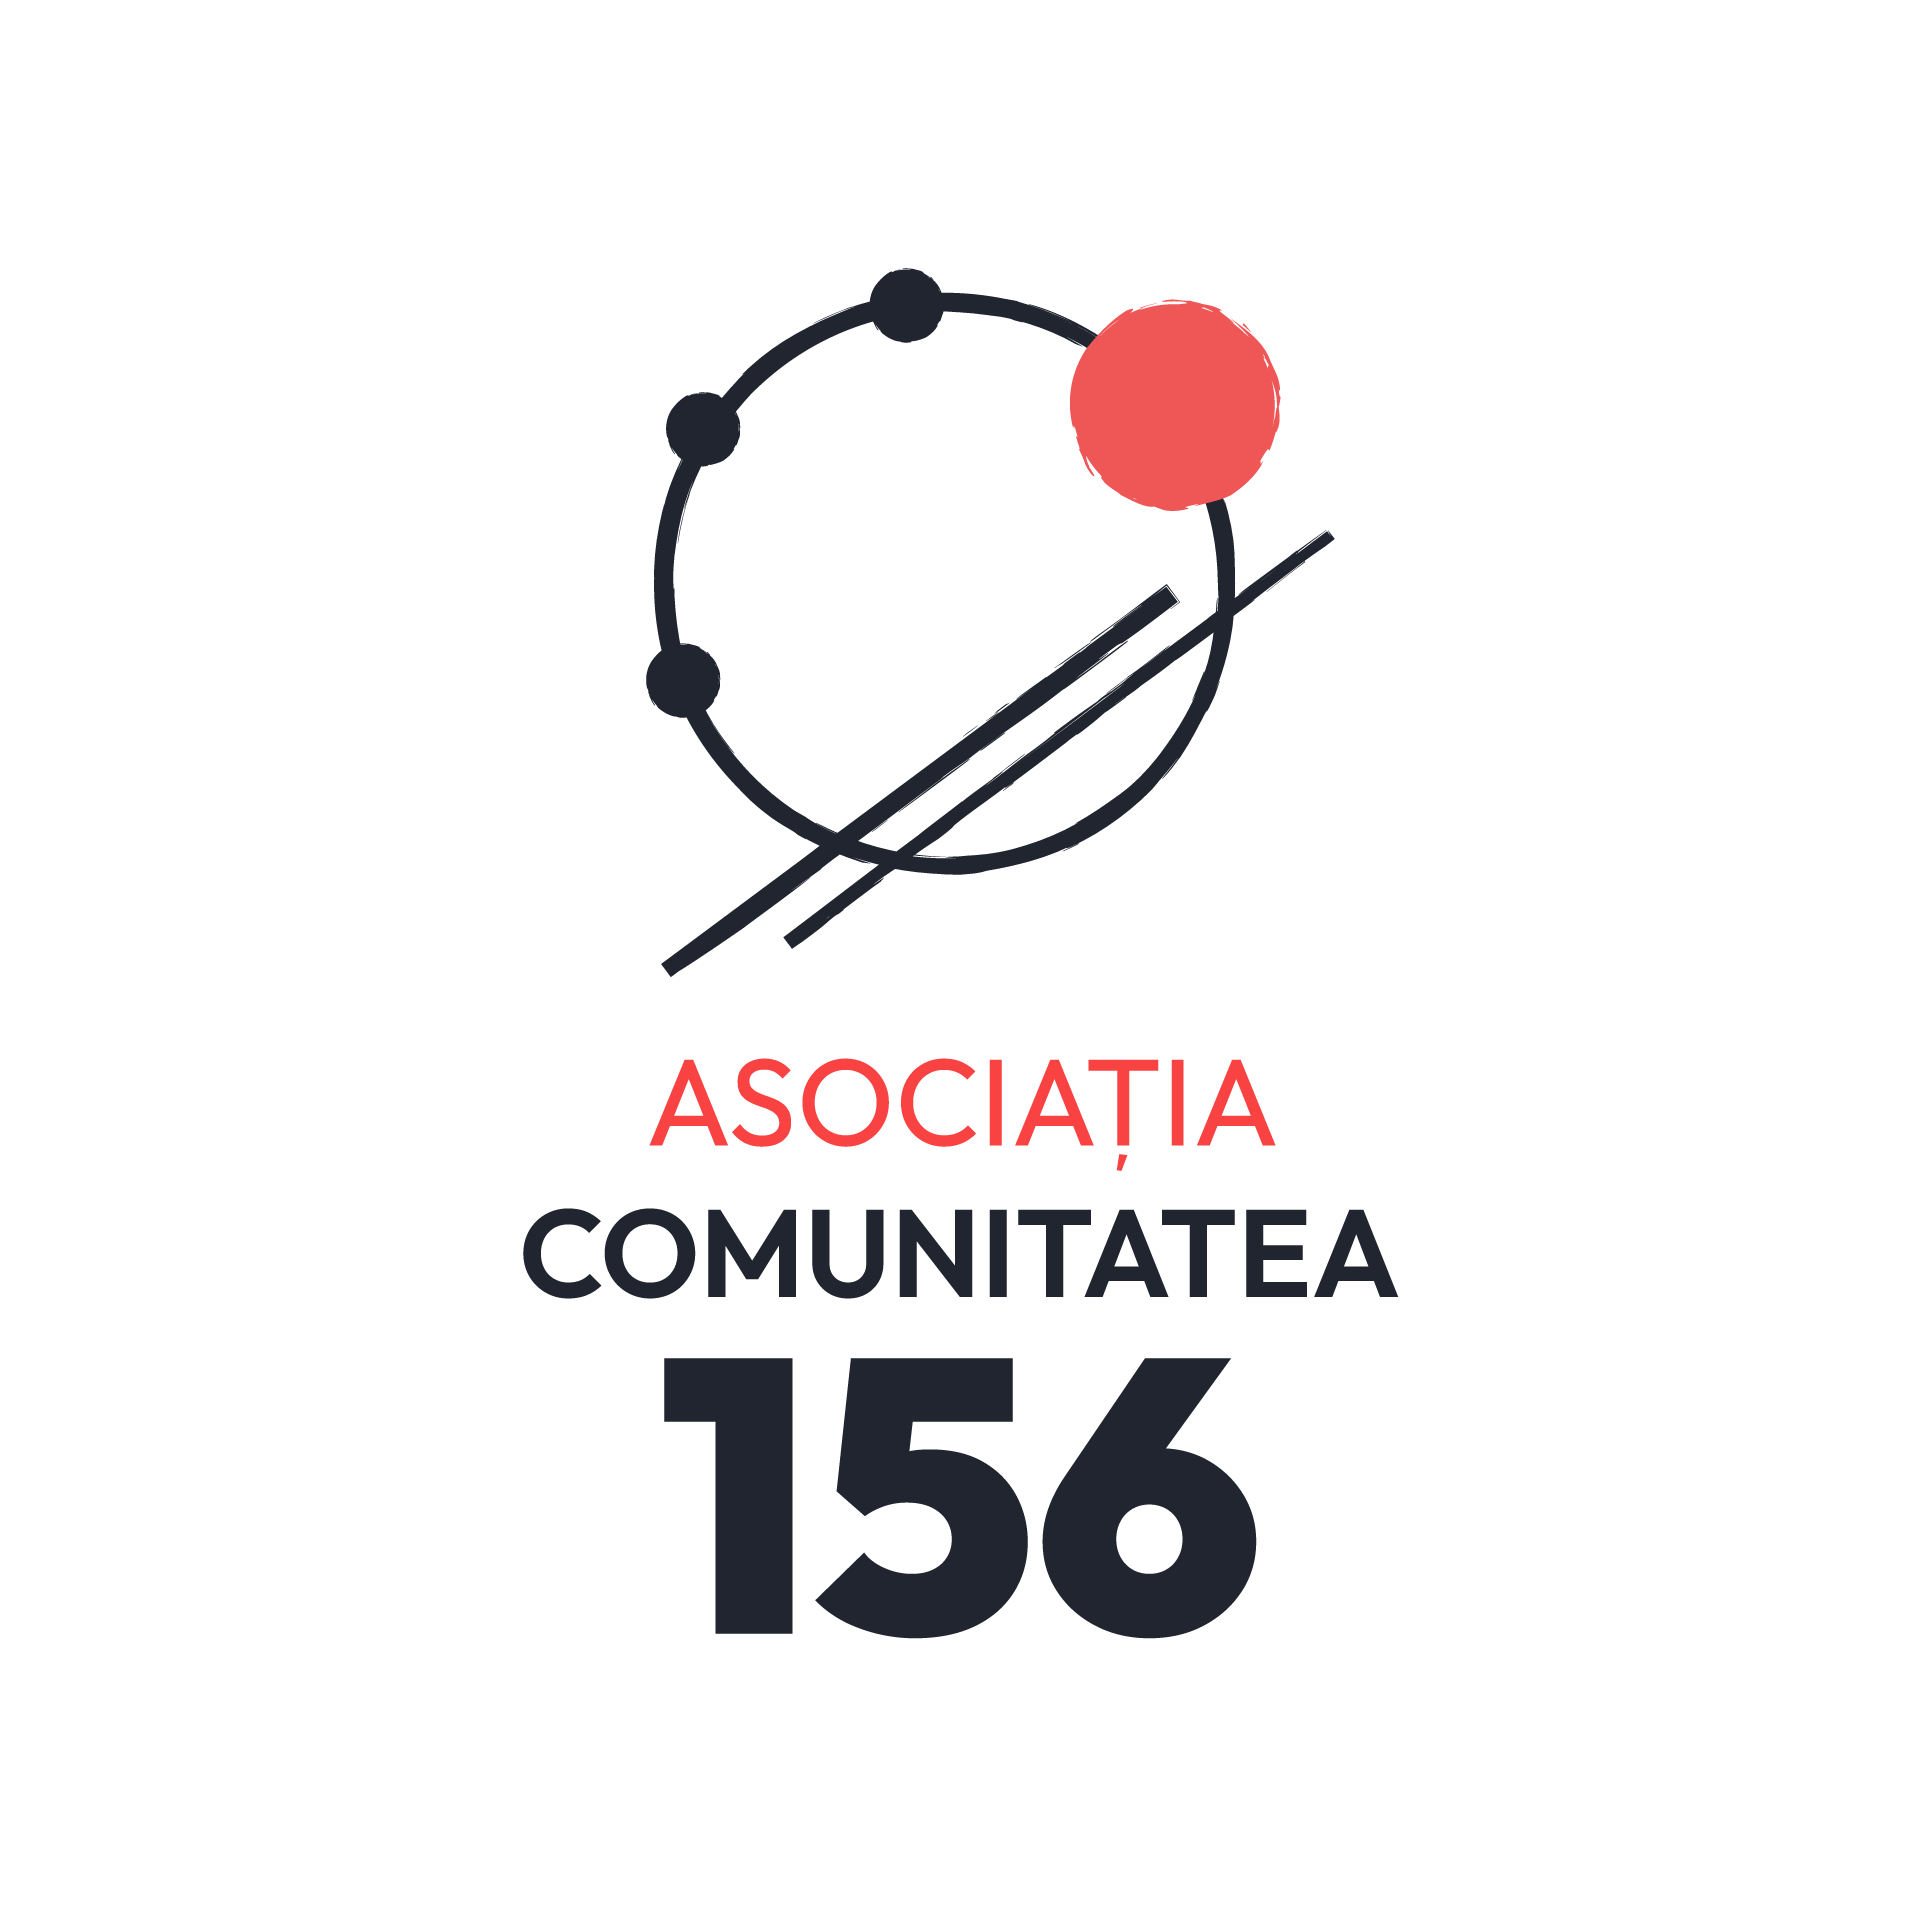 COMUNITATEA 156 logo